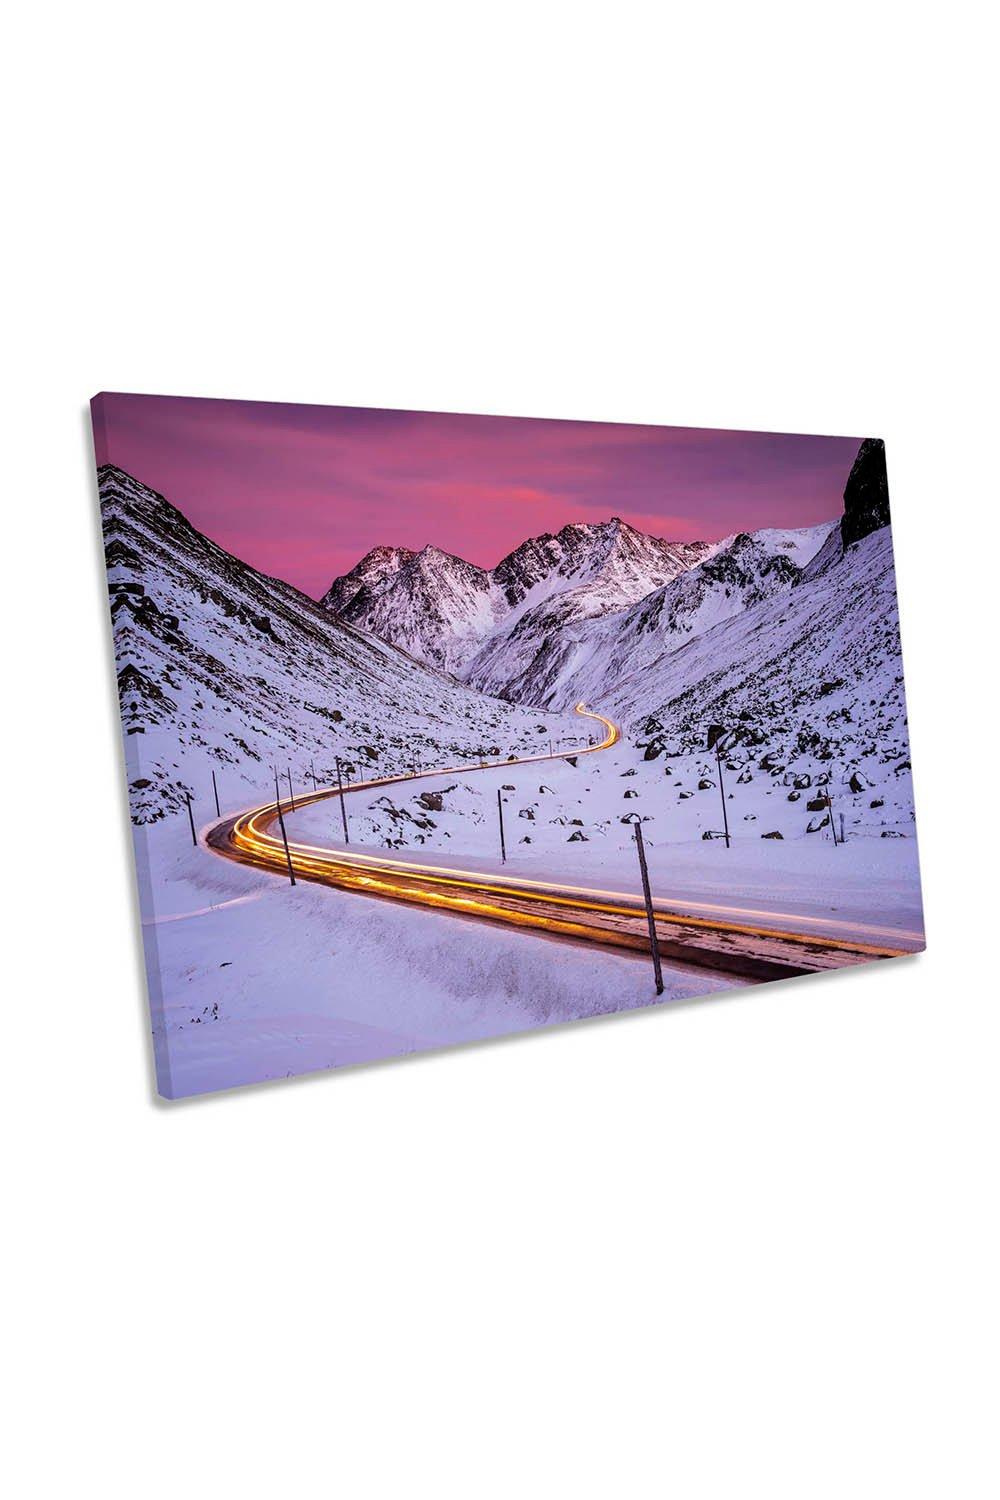 Drive Through Fluela Switzerland Alps Canvas Wall Art Picture Print